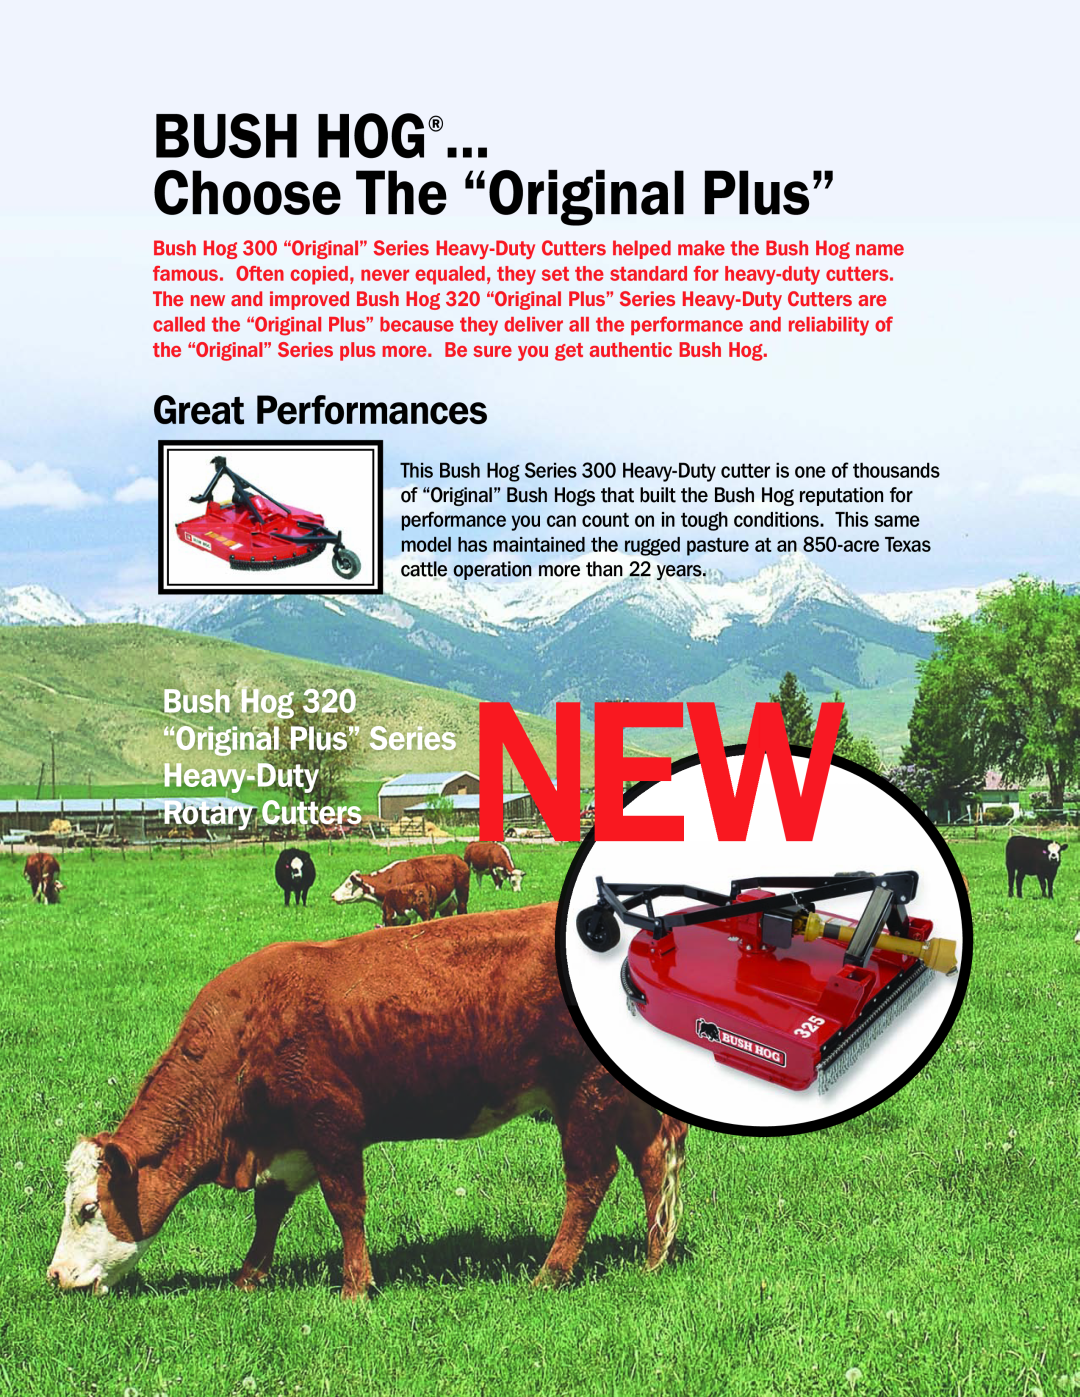 Bush Hog 320 Series manual BUSH HOG Choose The “Original Plus”, Great Performances, Bush Hog 320 New “Original Plus” Series 